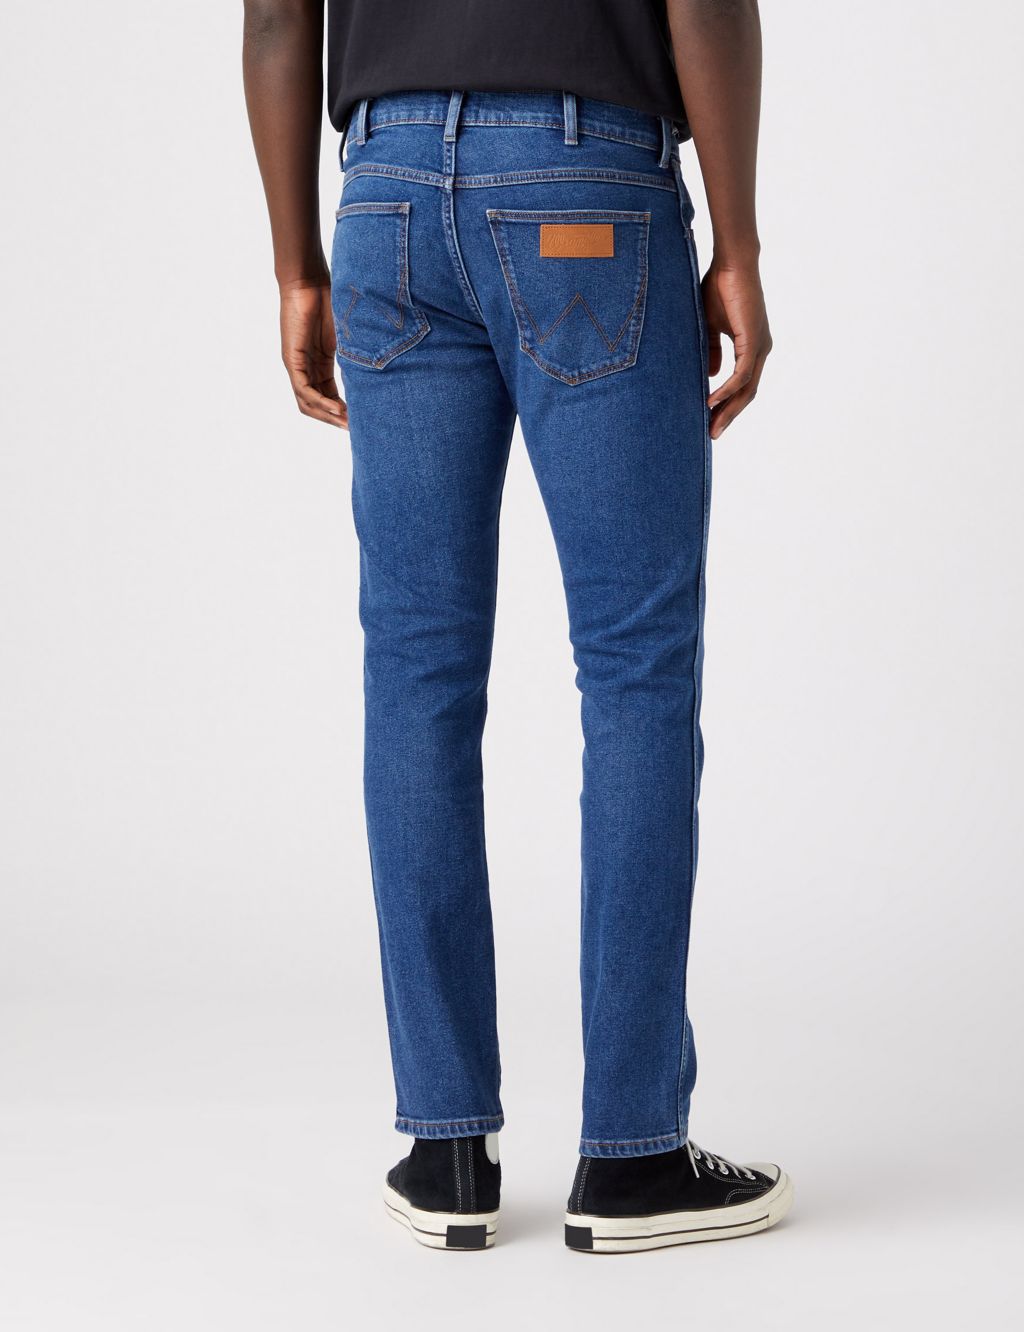 Larston Tapered Slim Fit 5 Pocket Jeans image 3